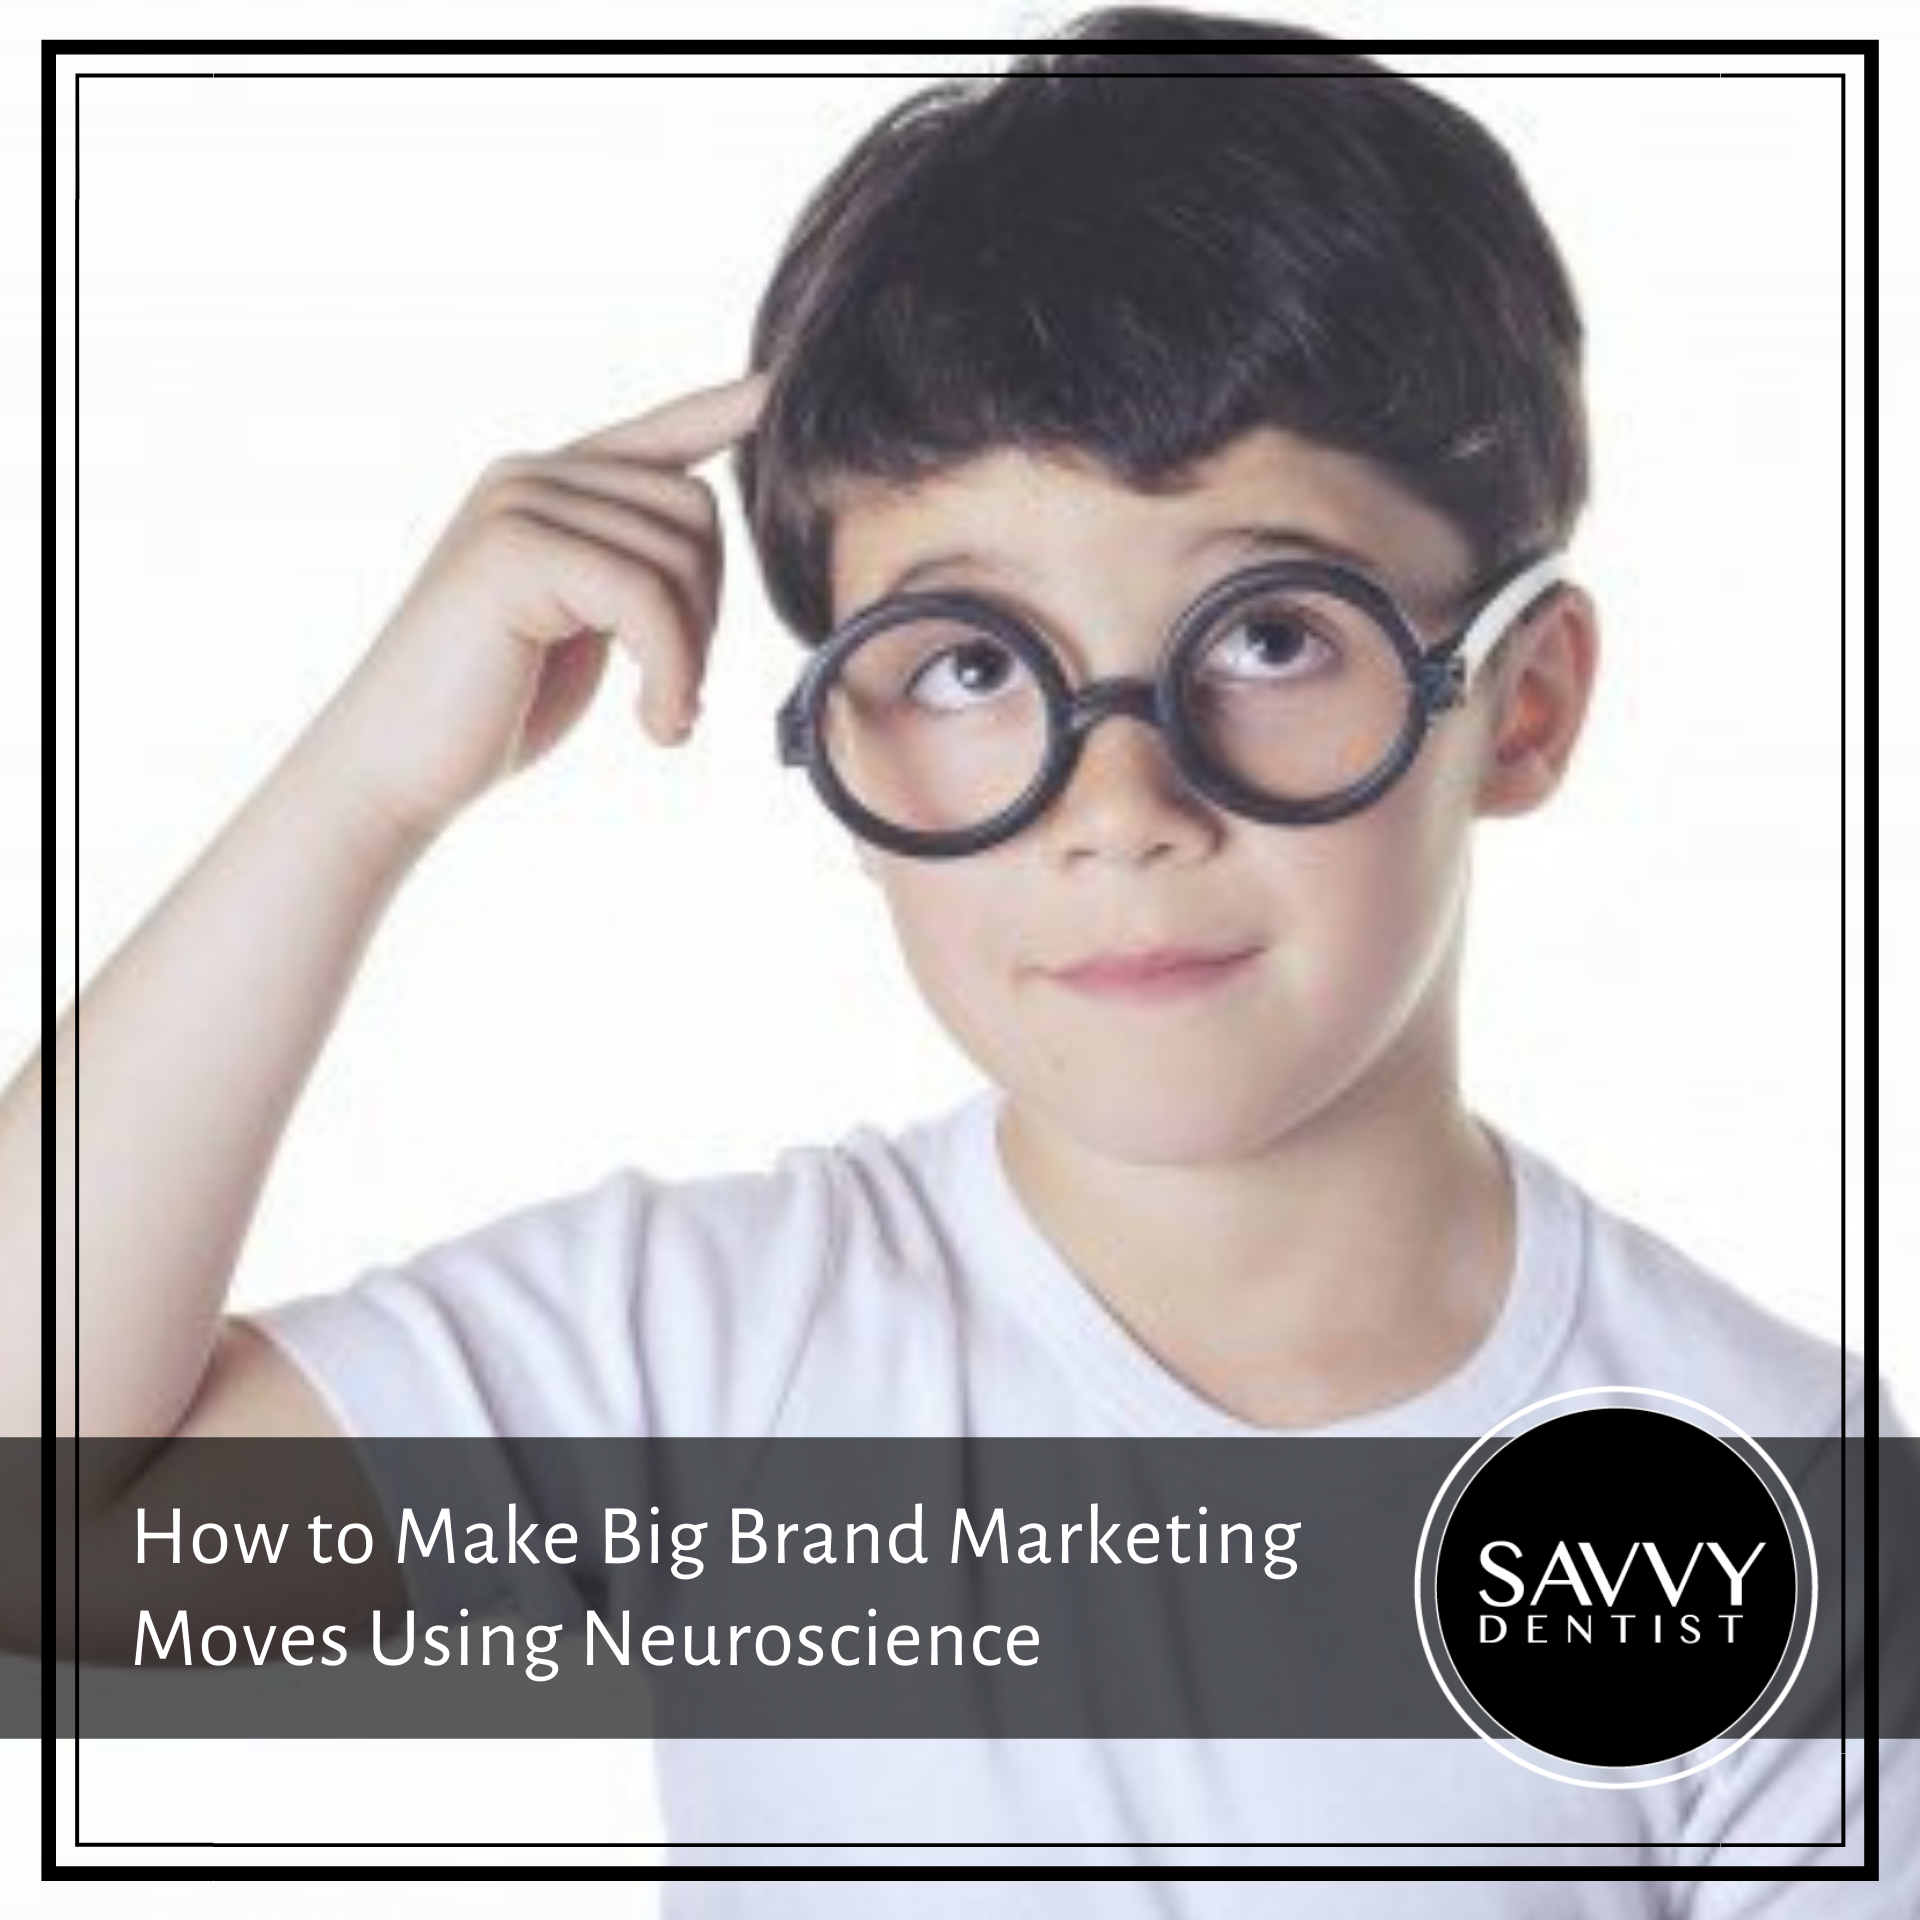 How to make big brand marketing moves using neuroscience